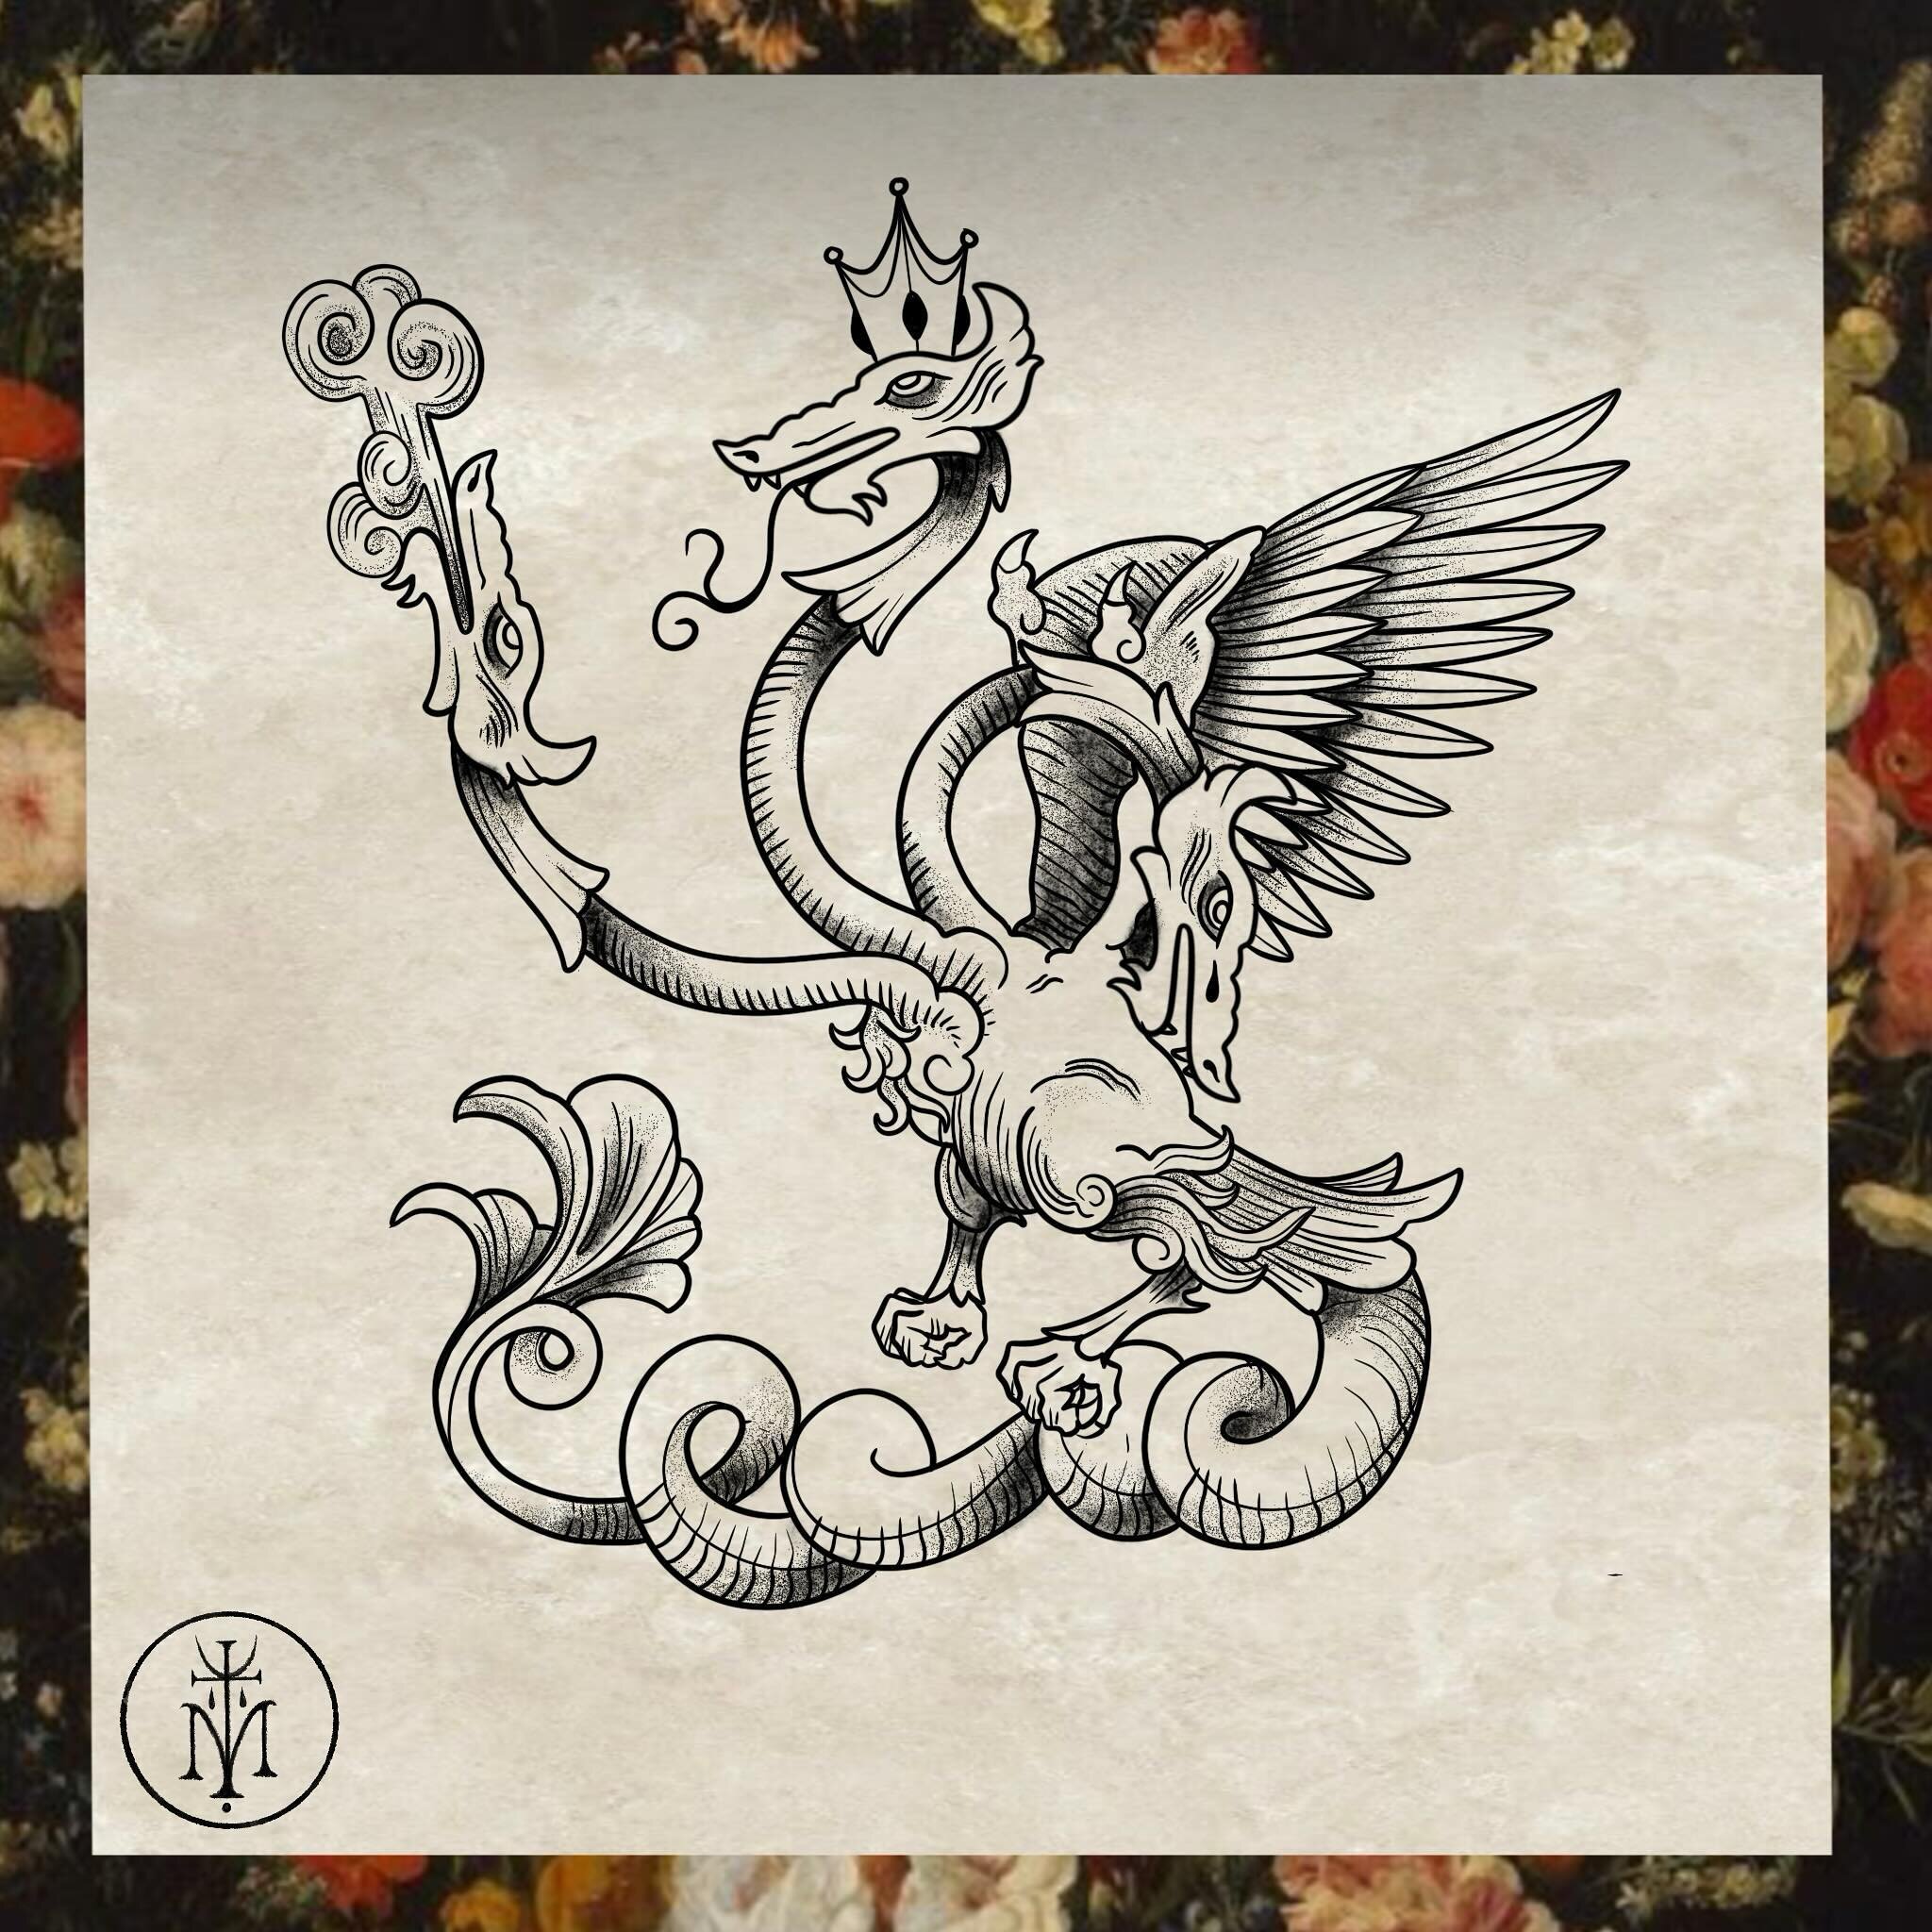 ⚜️available design⚜️
Dm for inquiries!
.
.
.
.
.
.
.
.
.
.
#tattooflash #tattoos #dragons #medievaldragon